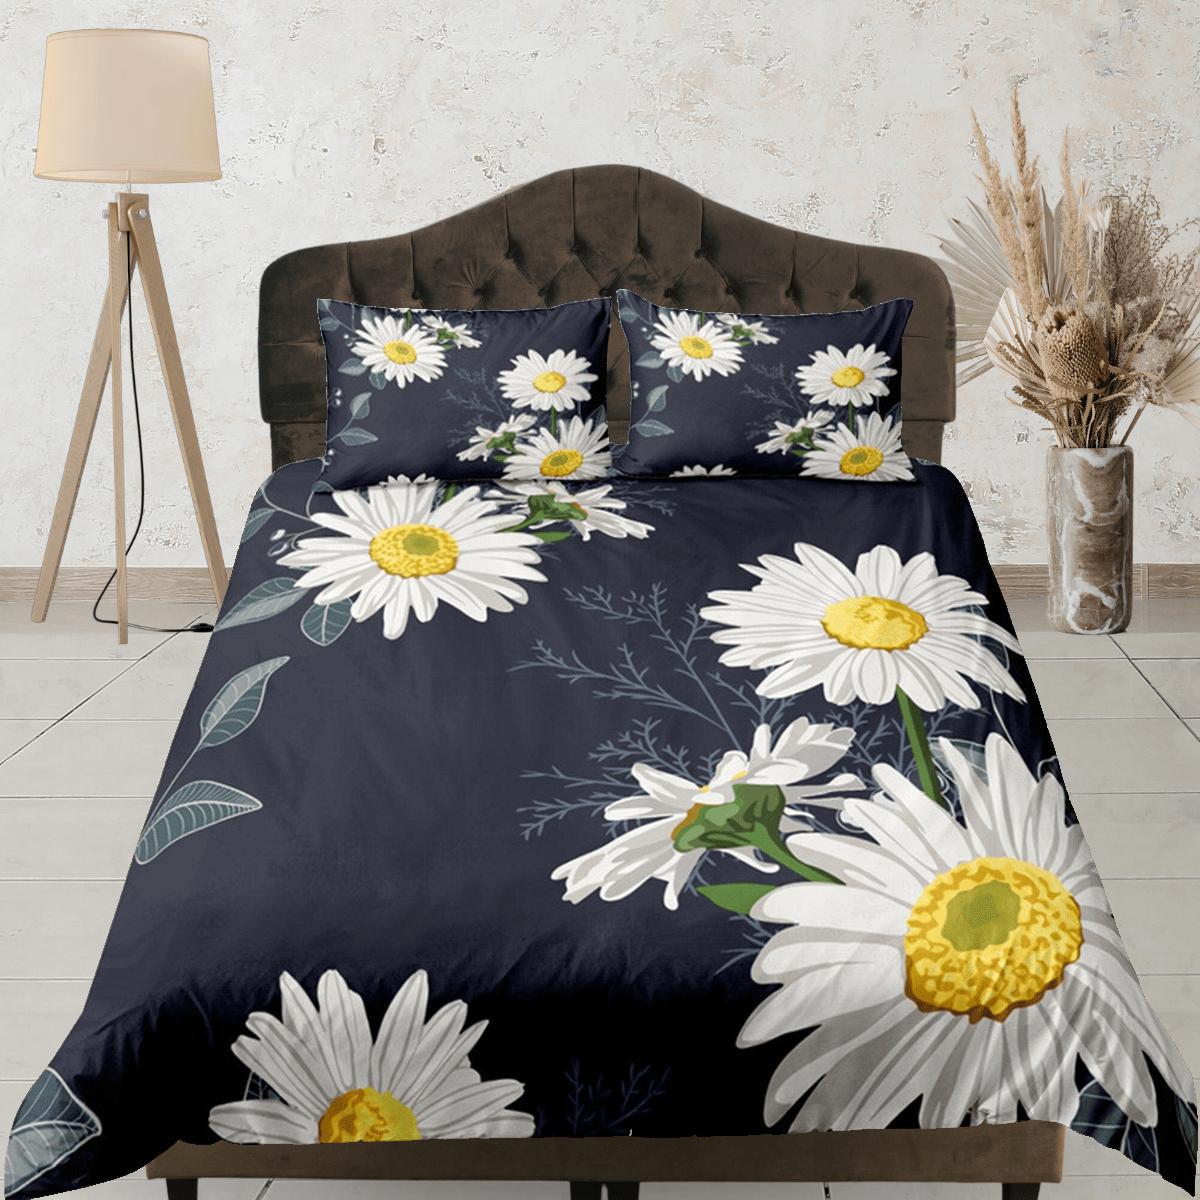 daintyduvet Floral Black Duvet Cover Set, White Daisy Bedspread Dorm Bedding Set Bedding Single